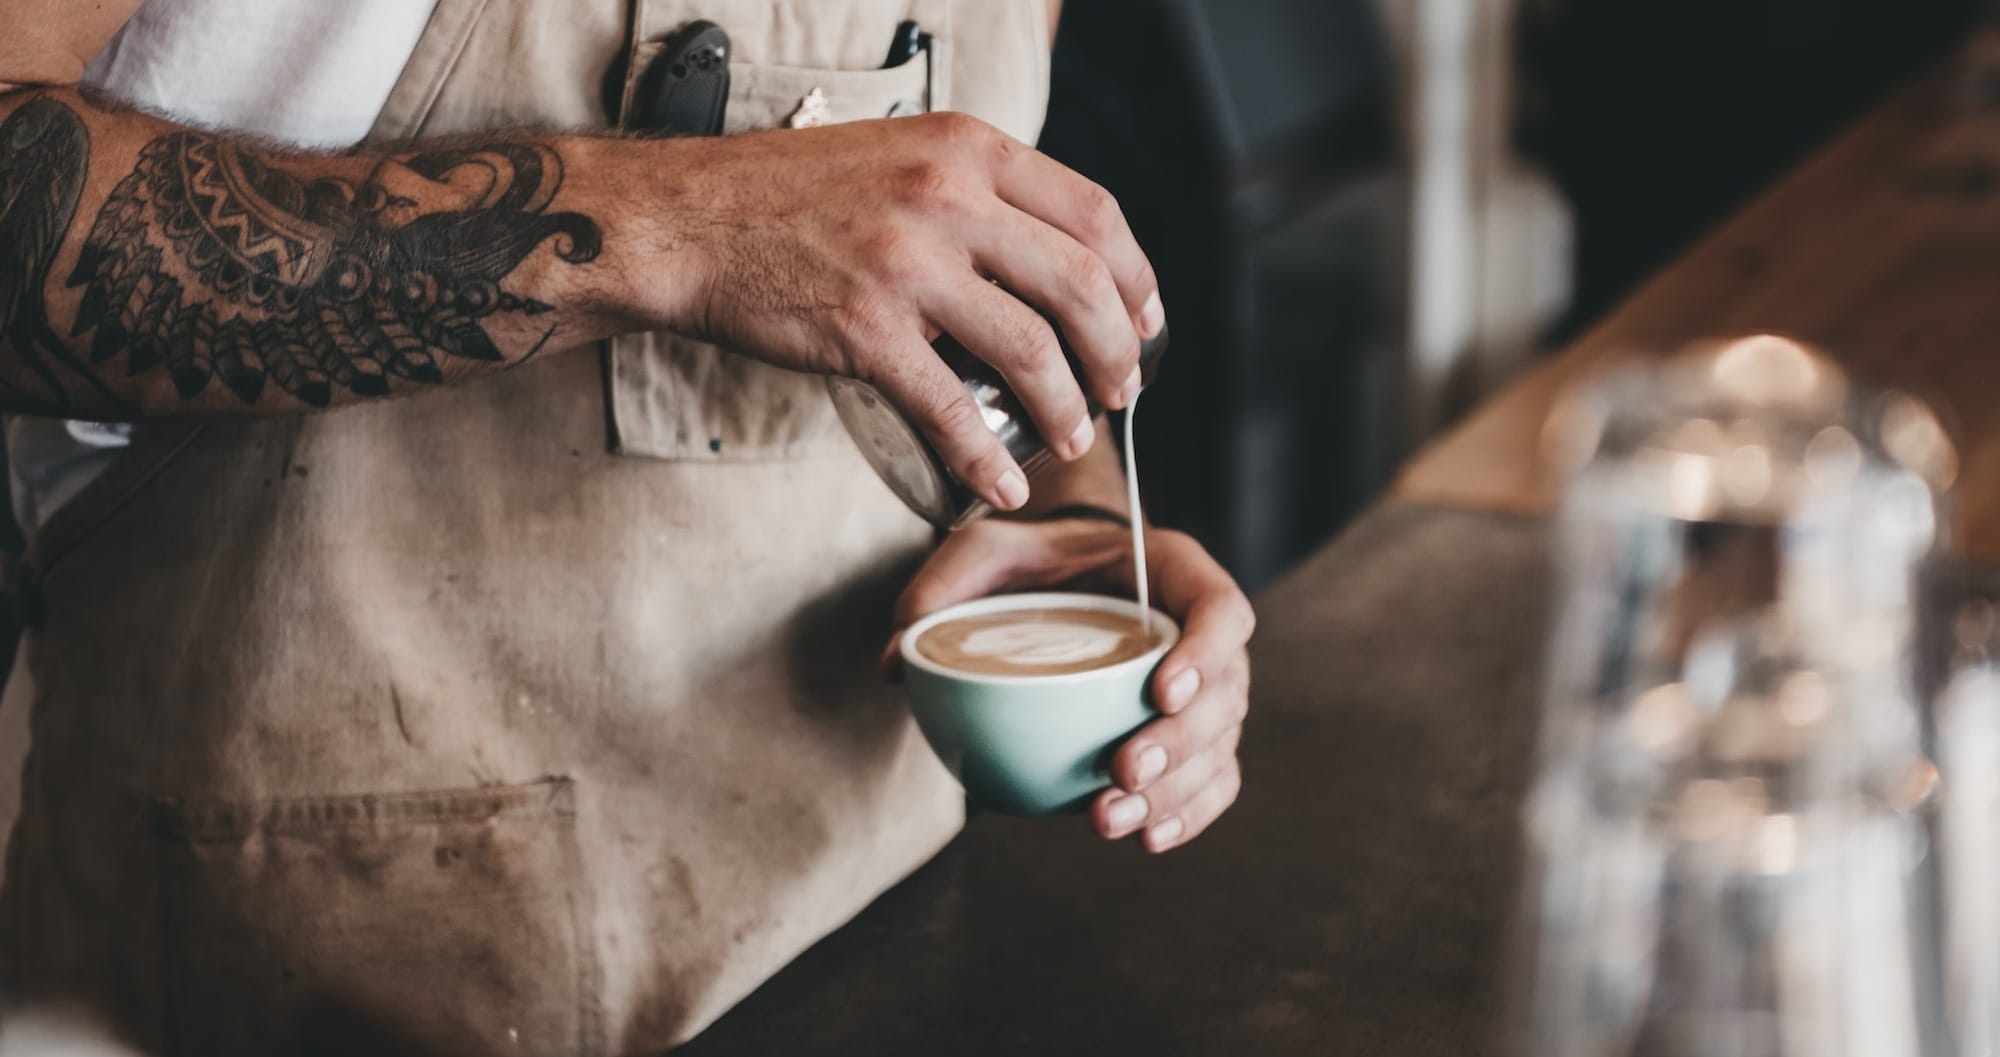 Man pouring mocha latte into a cup.